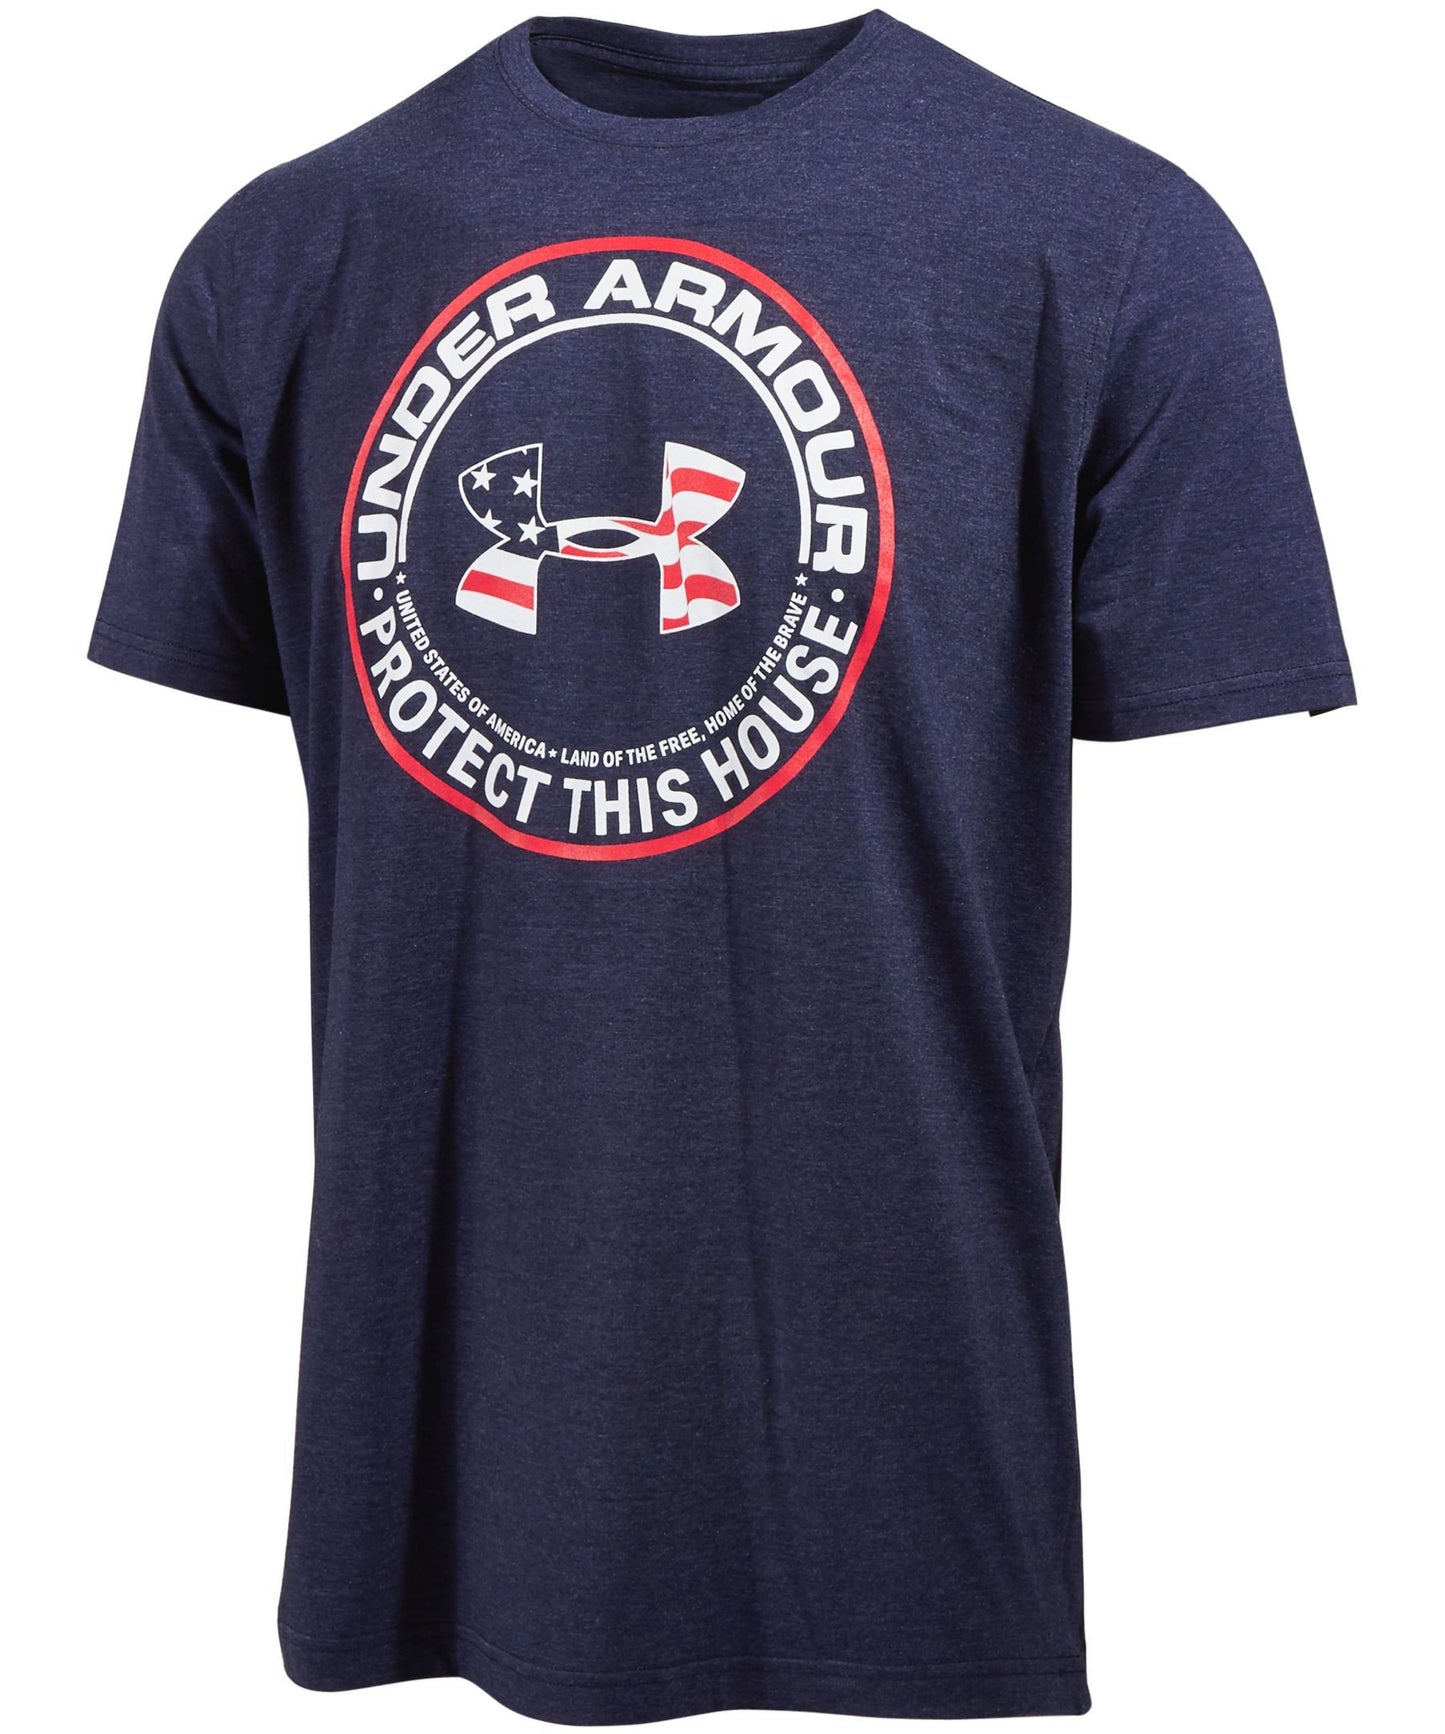 Under Armour Men's Graphic T-Shirt